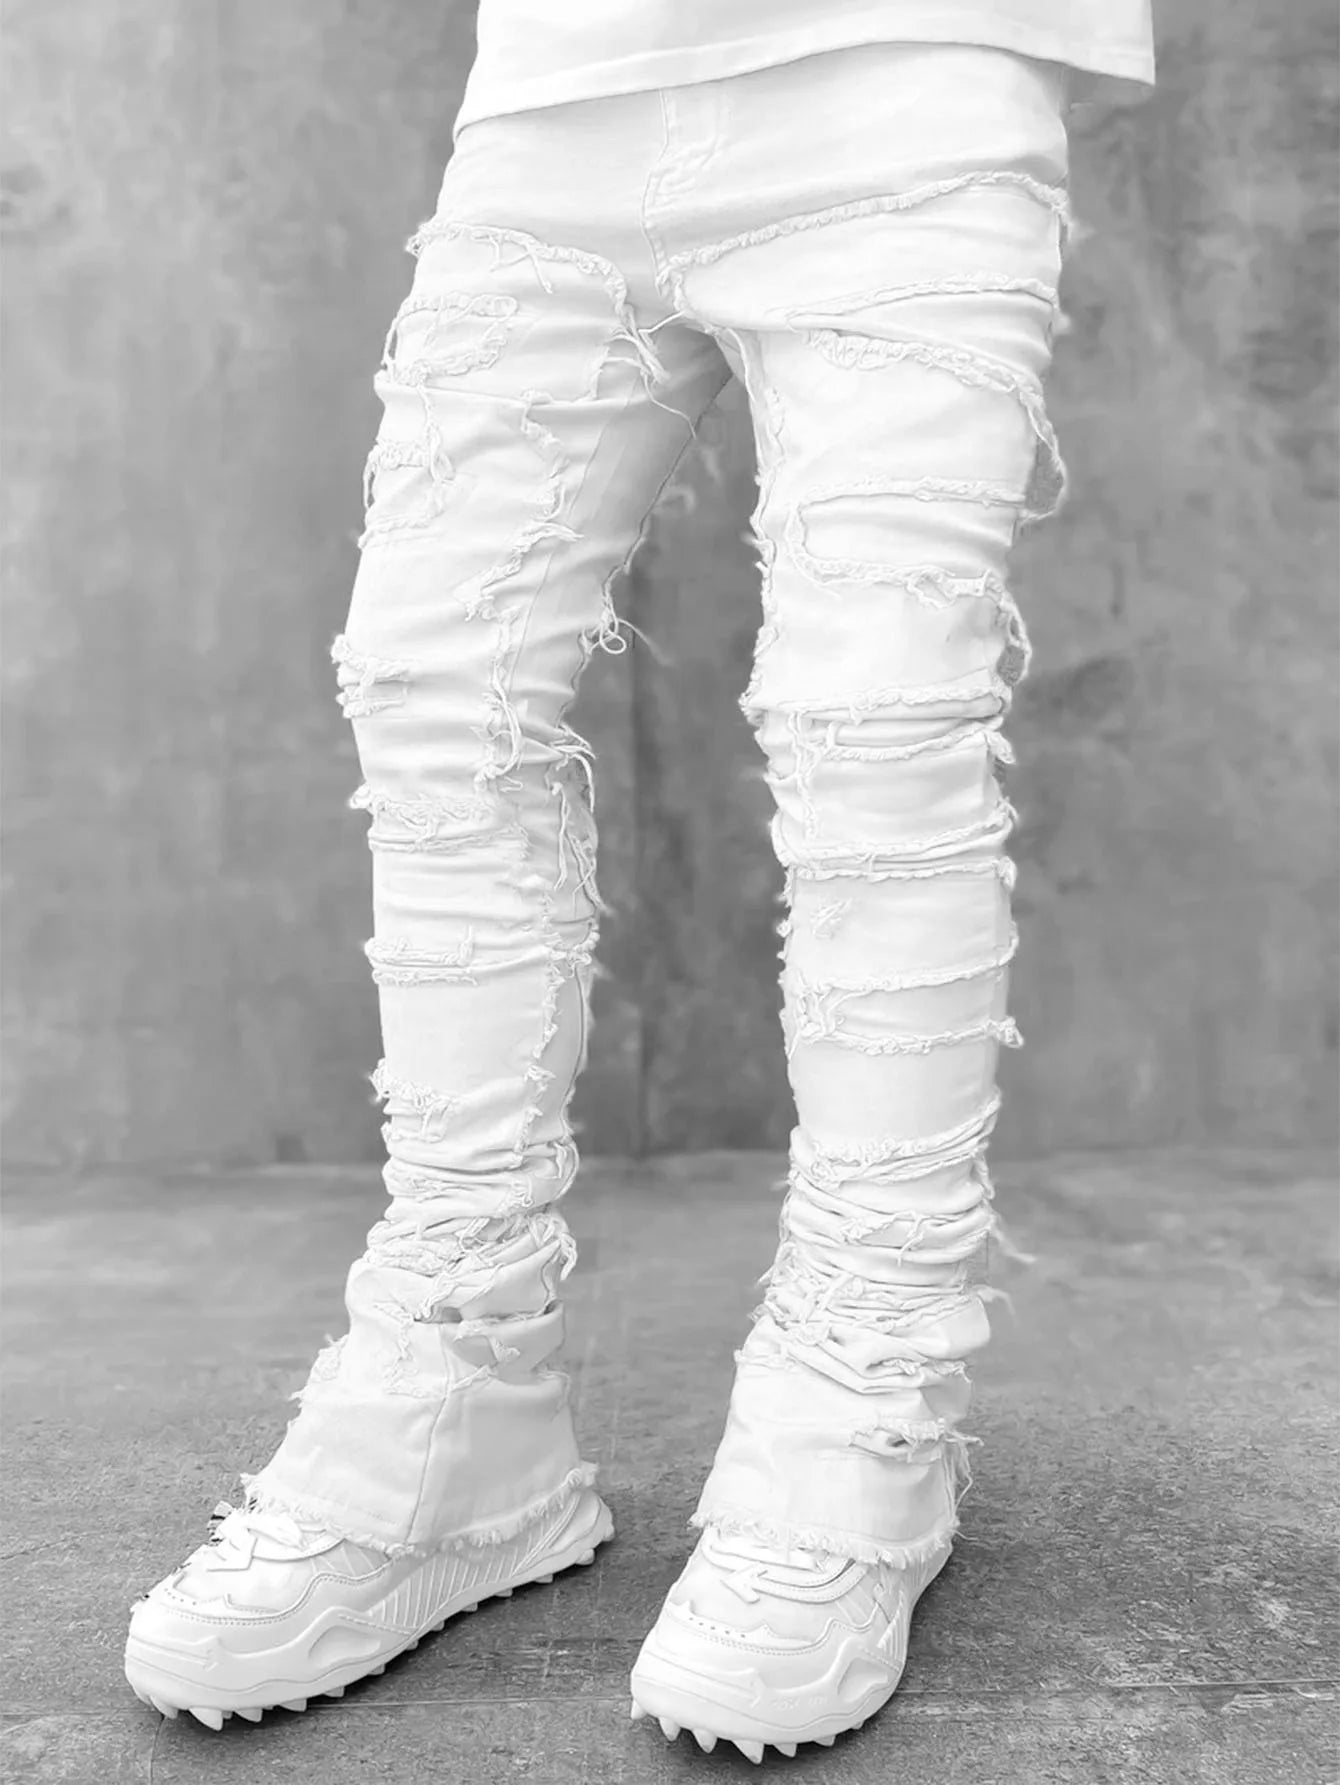 New Premium Vintage Blue Stacked Jeans For Men Stretchy Raw Frayed Denim Destroyed Washed Patchworks Pants